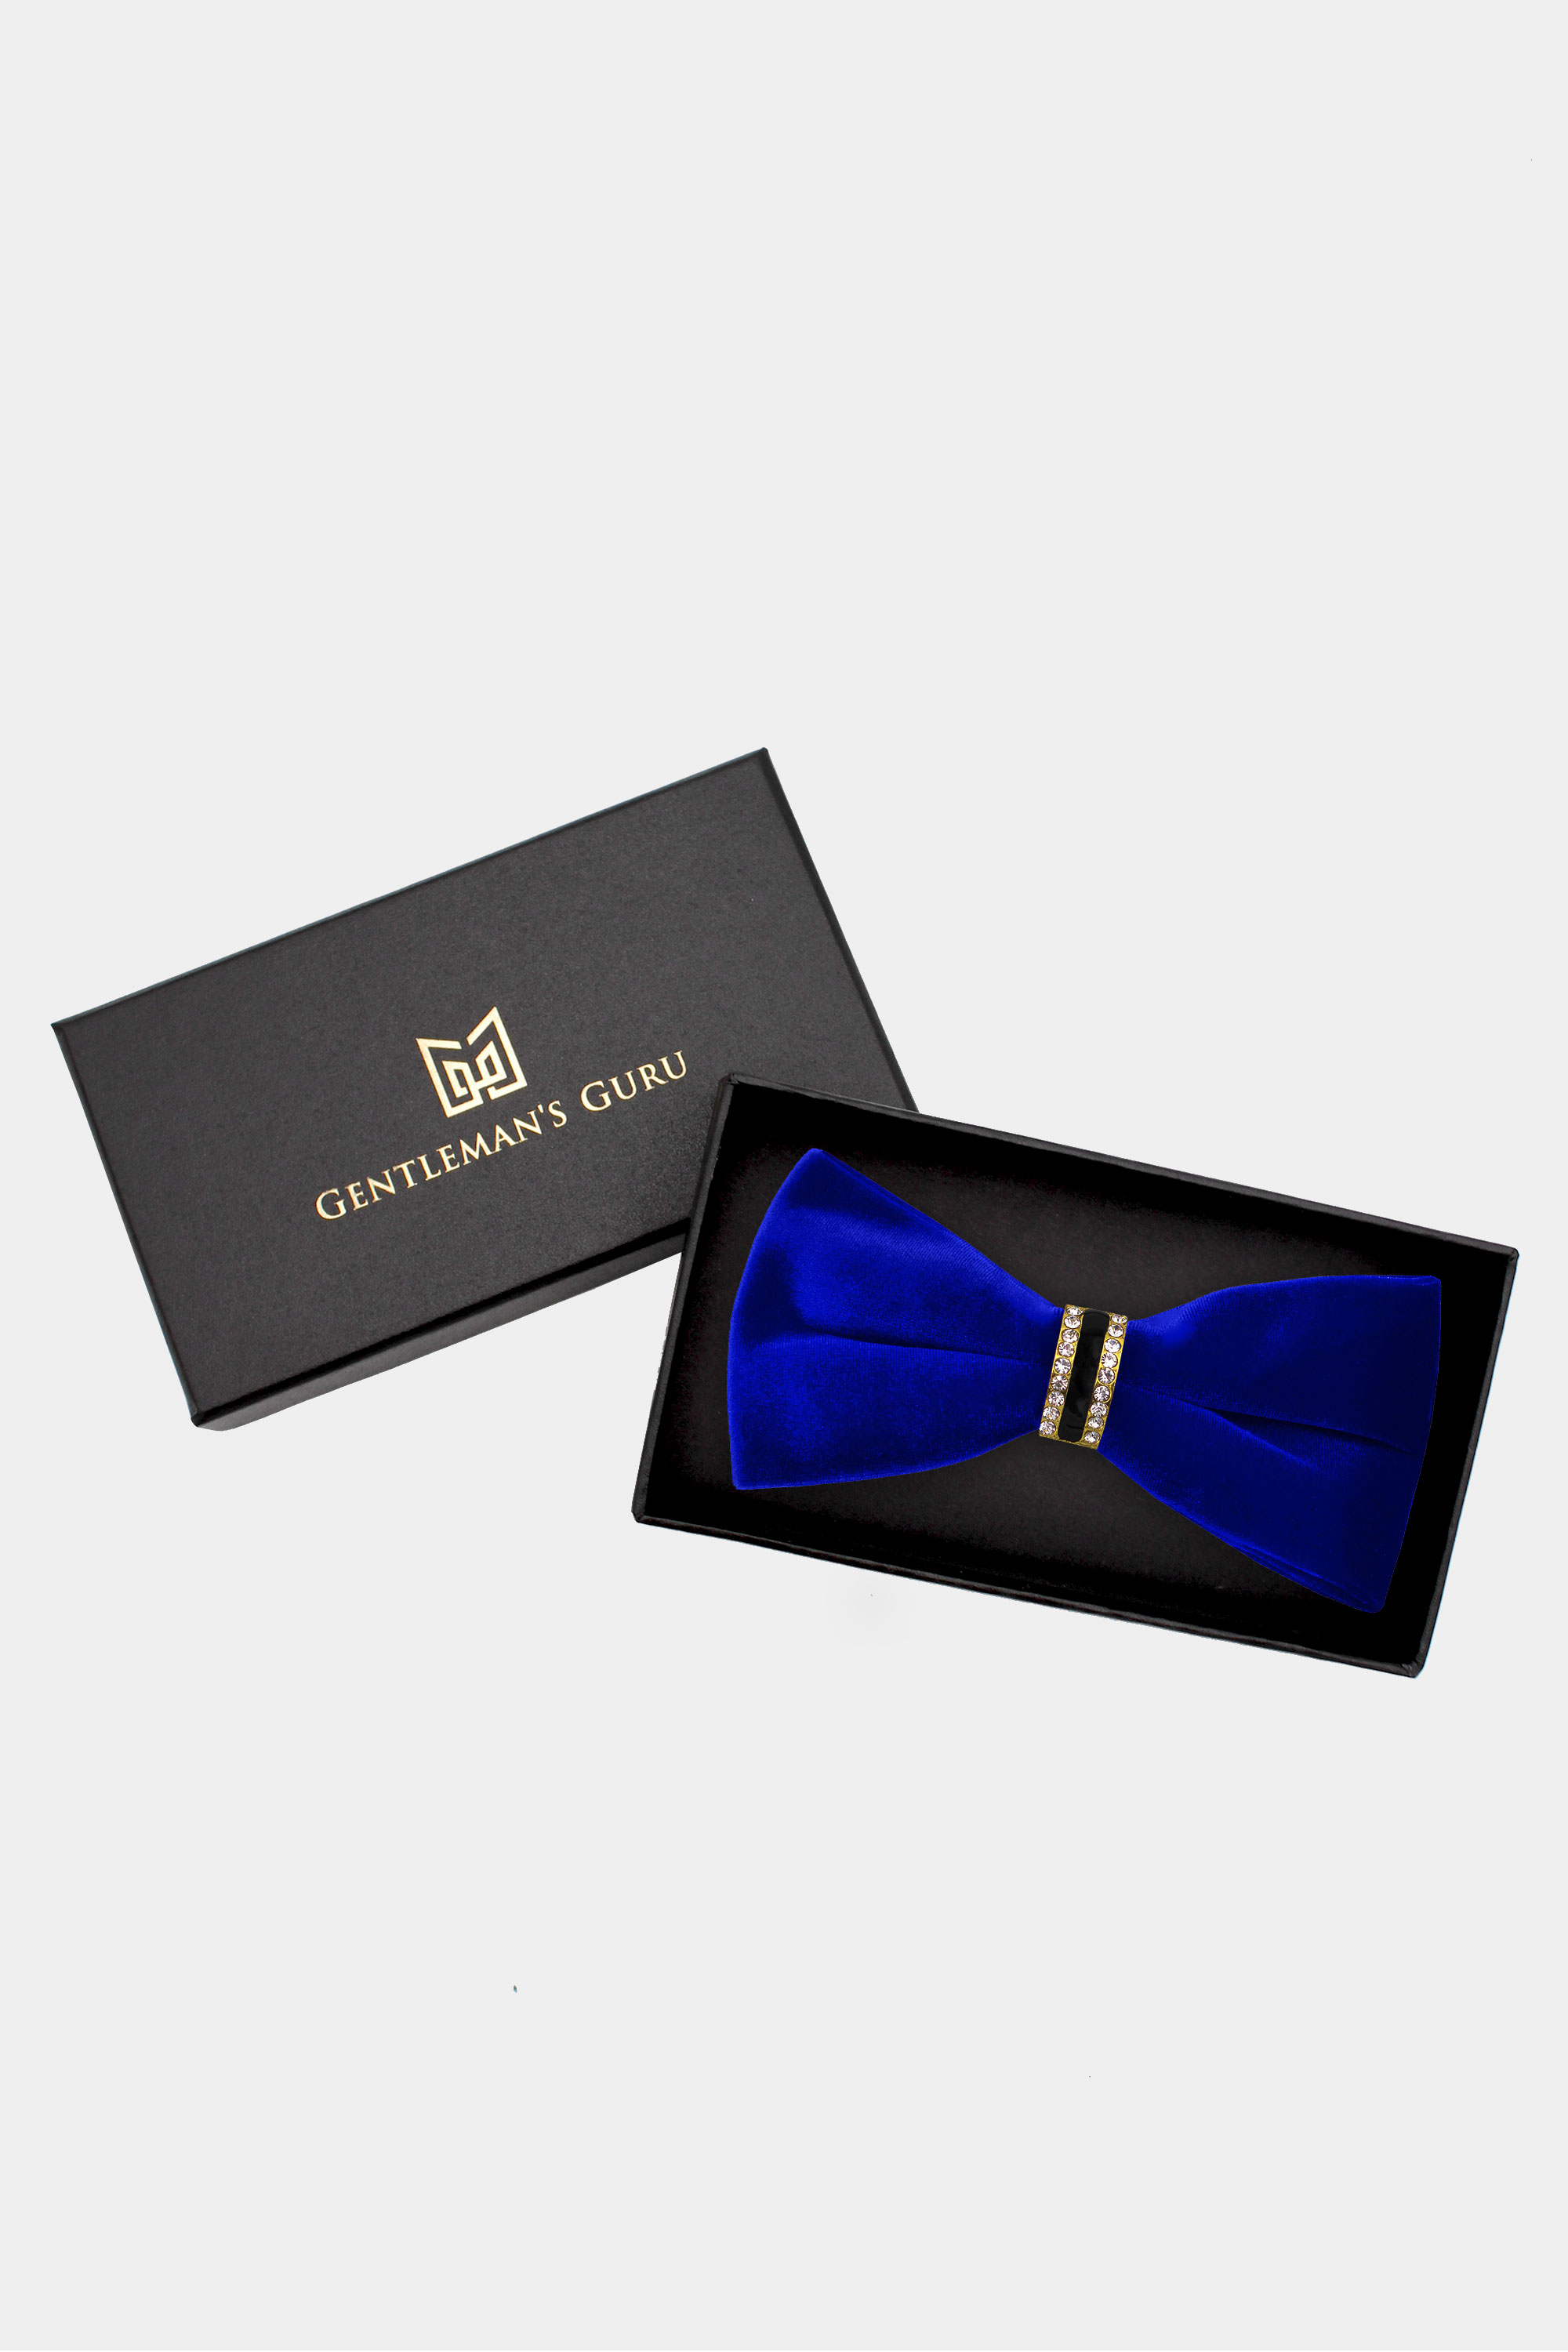 Luxury-Royal-Blue-Velvet-Bow-Tie-from-Gentlemansguru.com